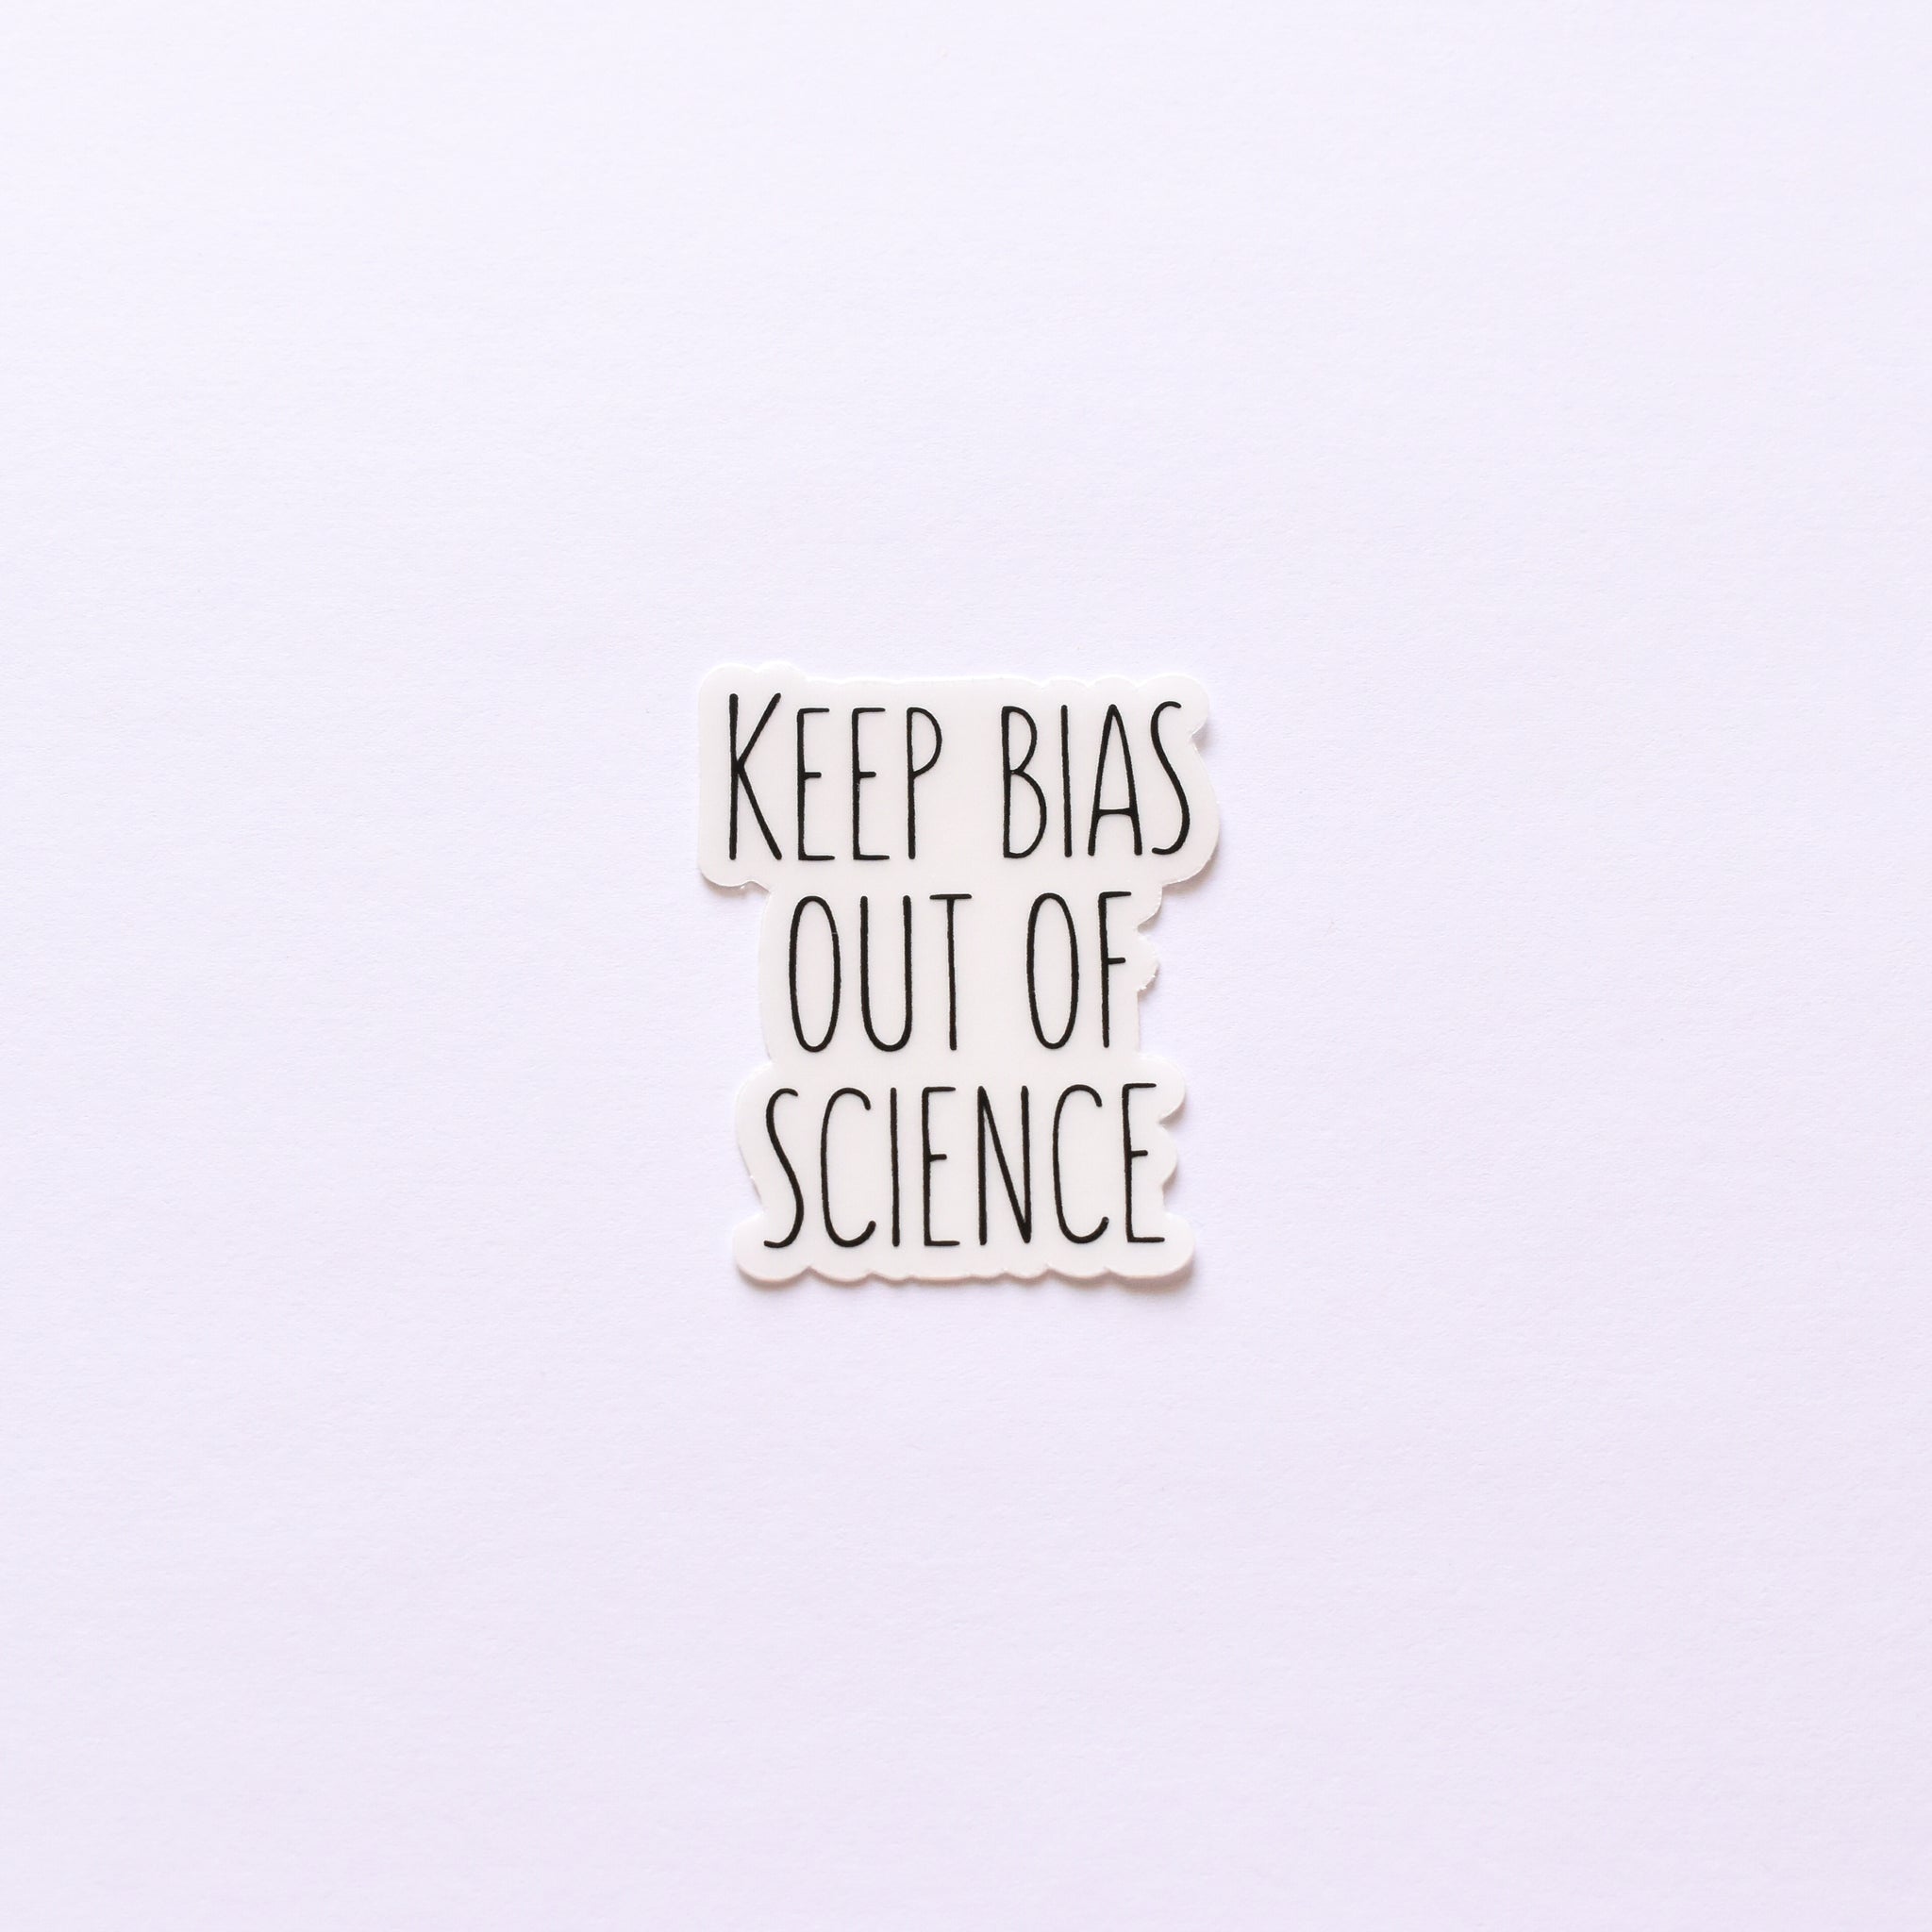 Keep bias out of science | transparent vinyl science sticker (STEM)